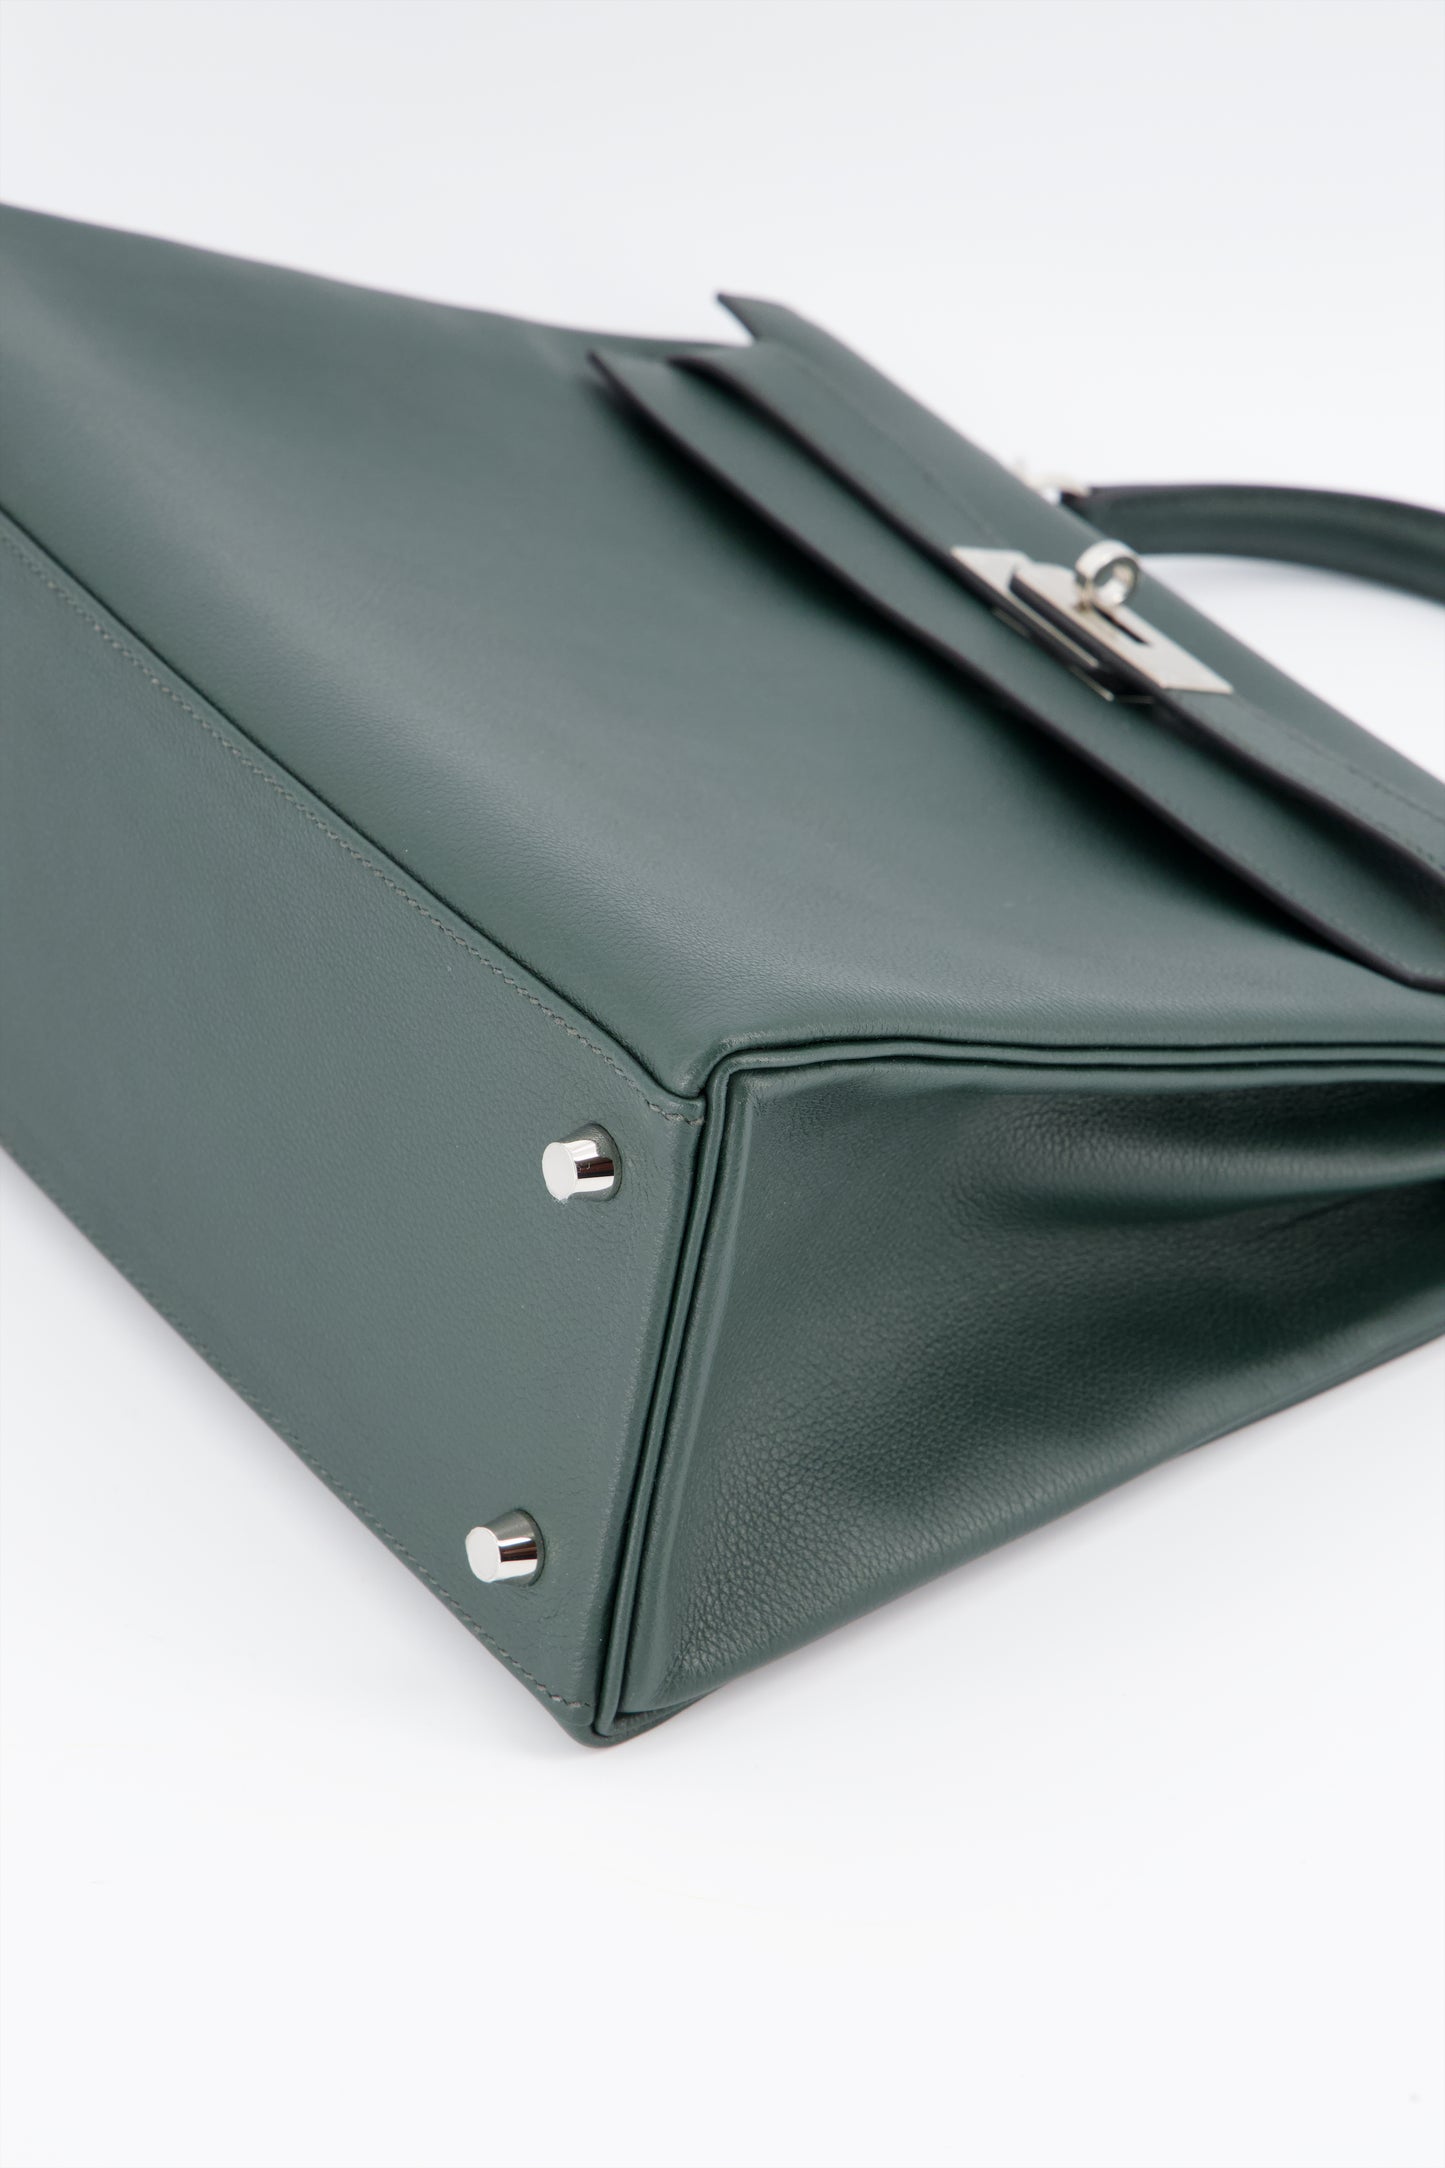 Hermes Kelly 32  Handbag Vert Titien Evercolor Leather Handbag With Palladium Hardware.